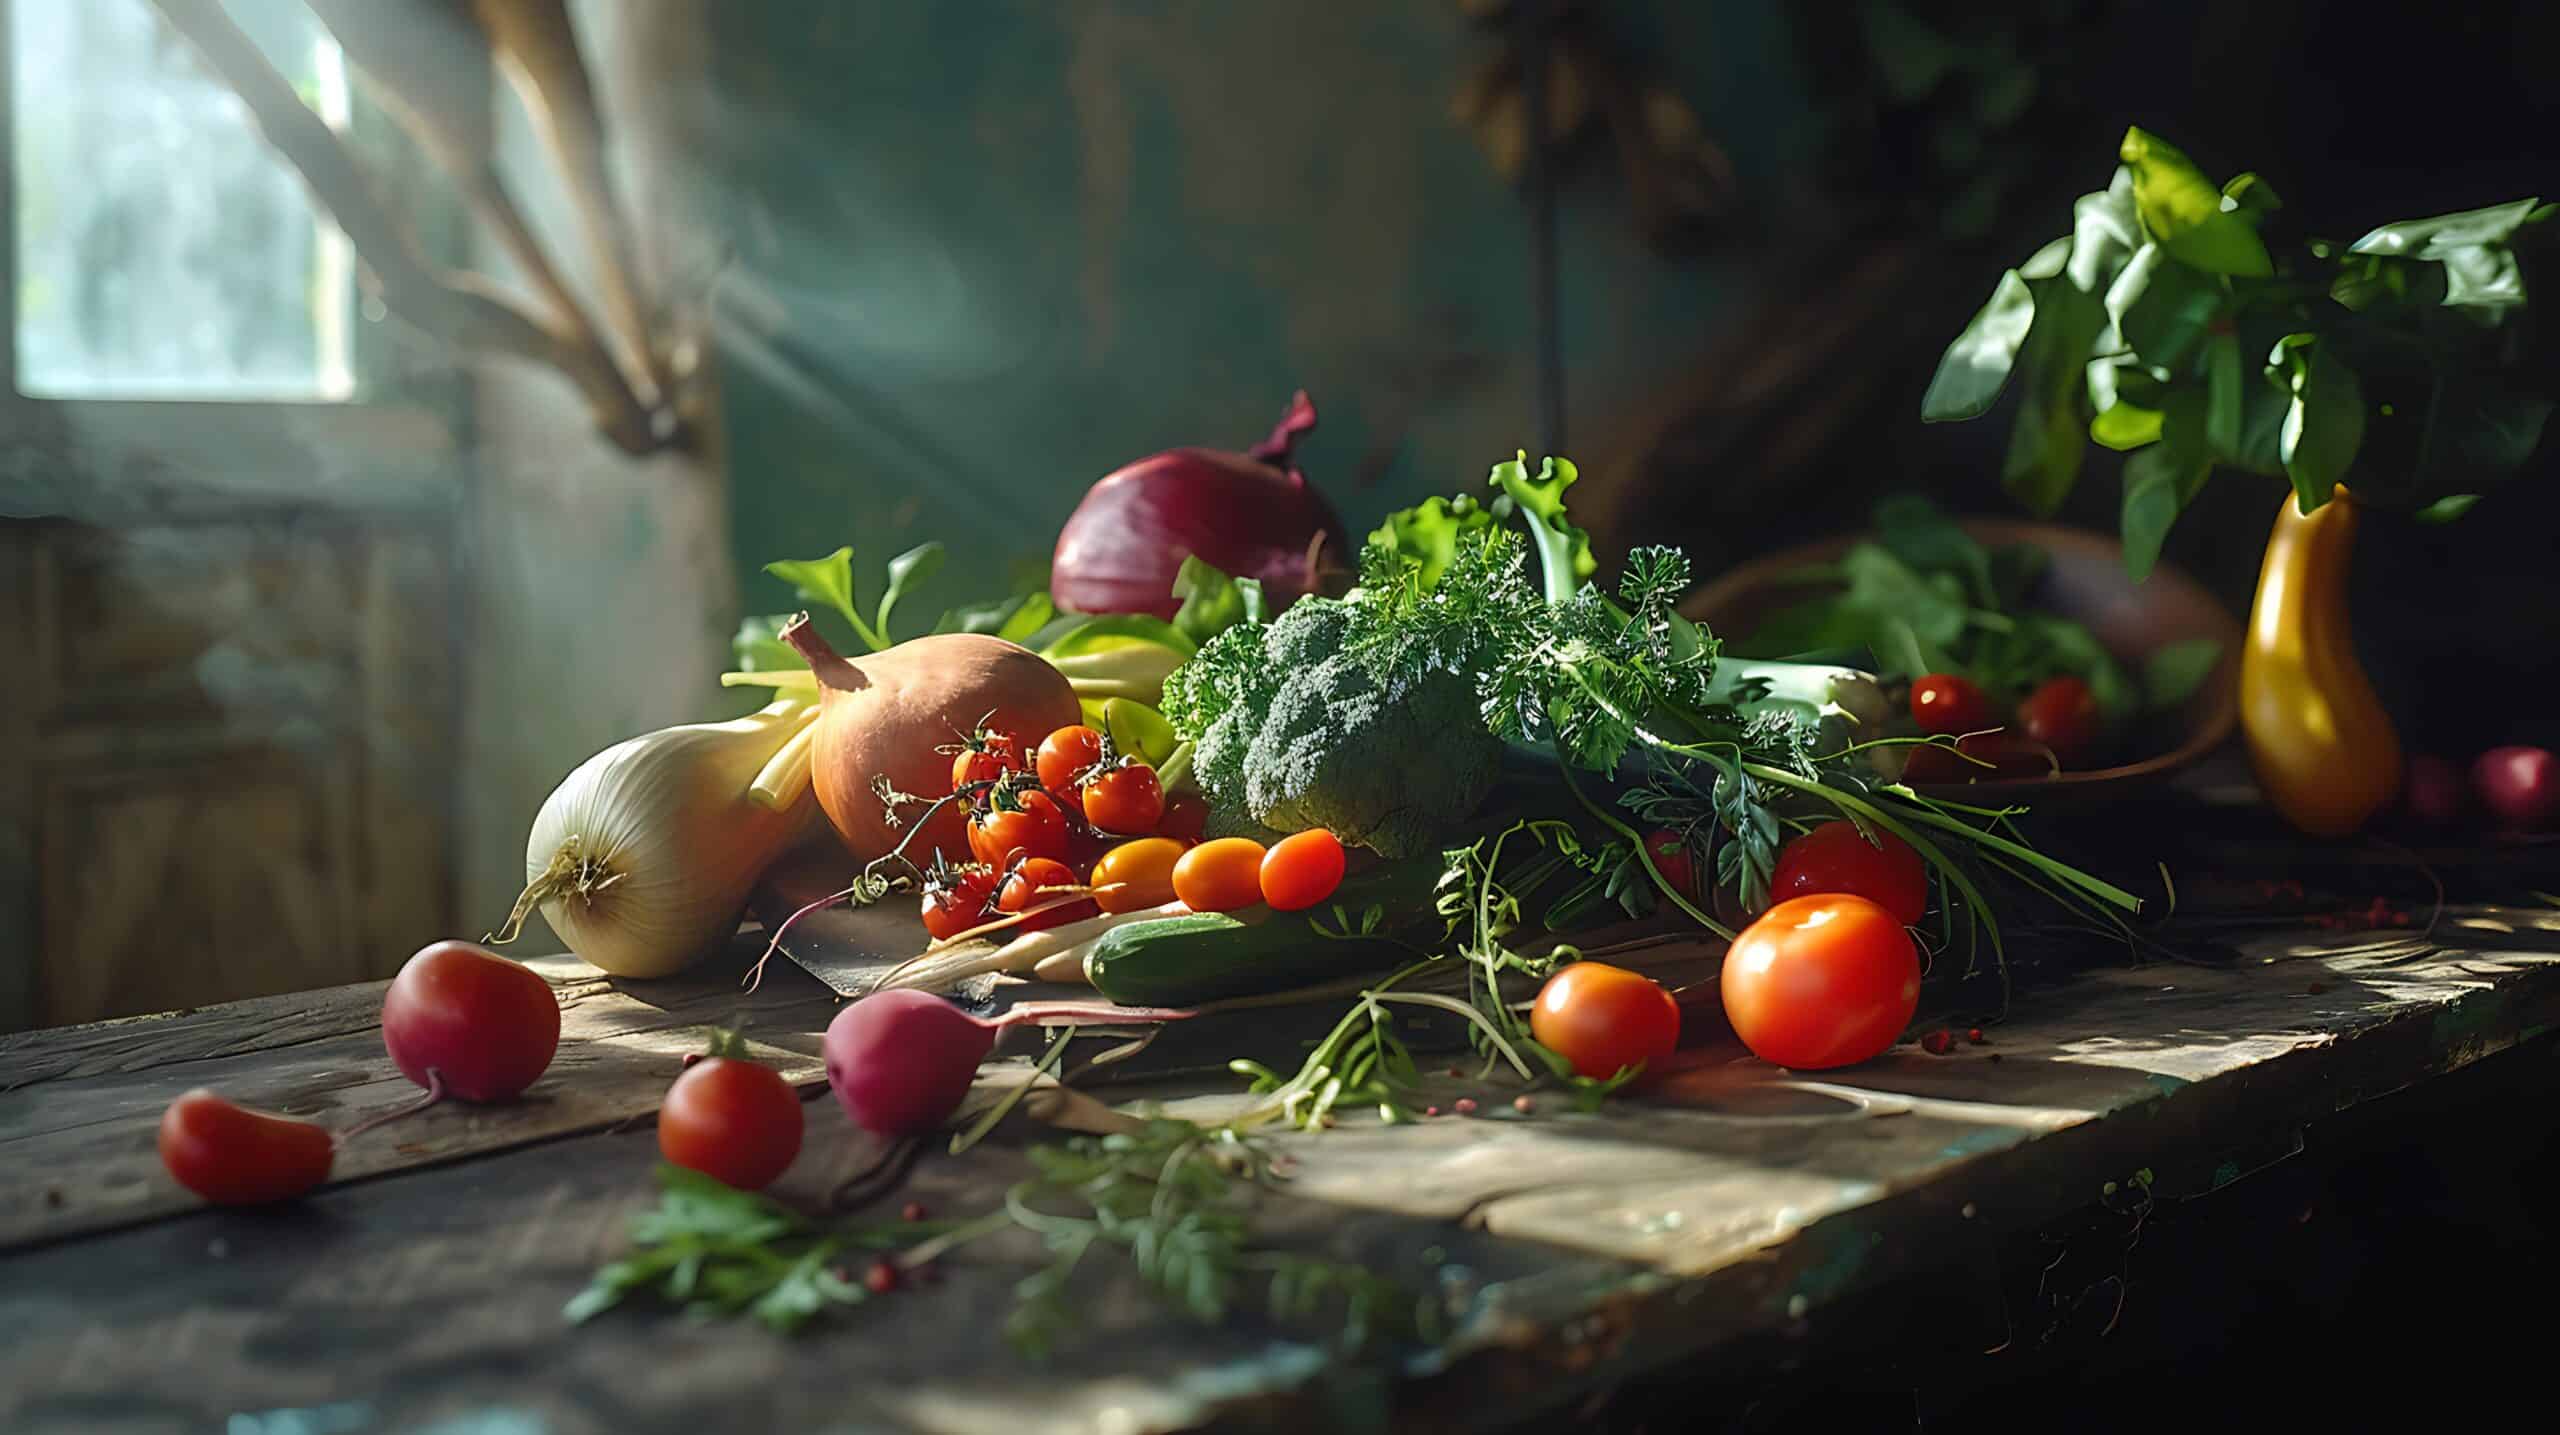 growmyownhealthfood.com : What is the fastest growing edible vegetable?